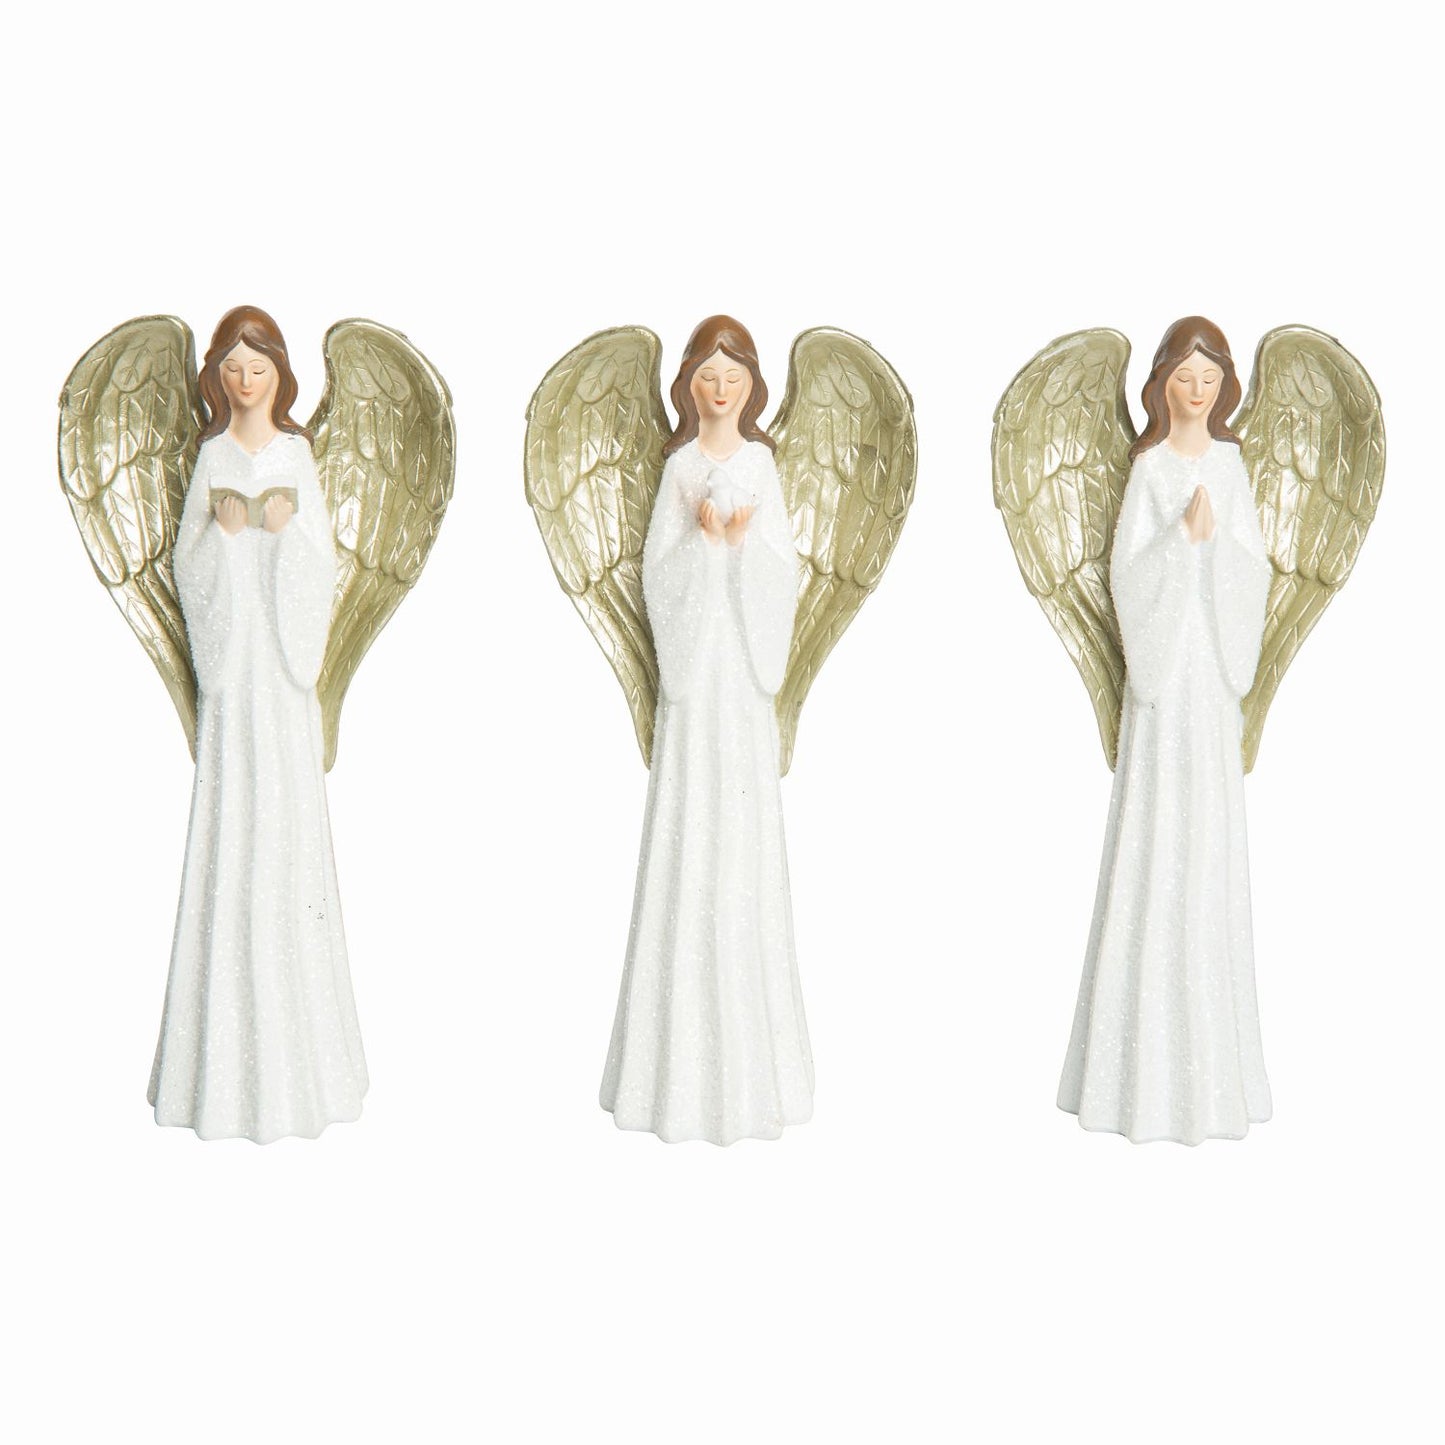 Transpac Resin Golden Winged Angel Decor, Set Of 3, Assortment